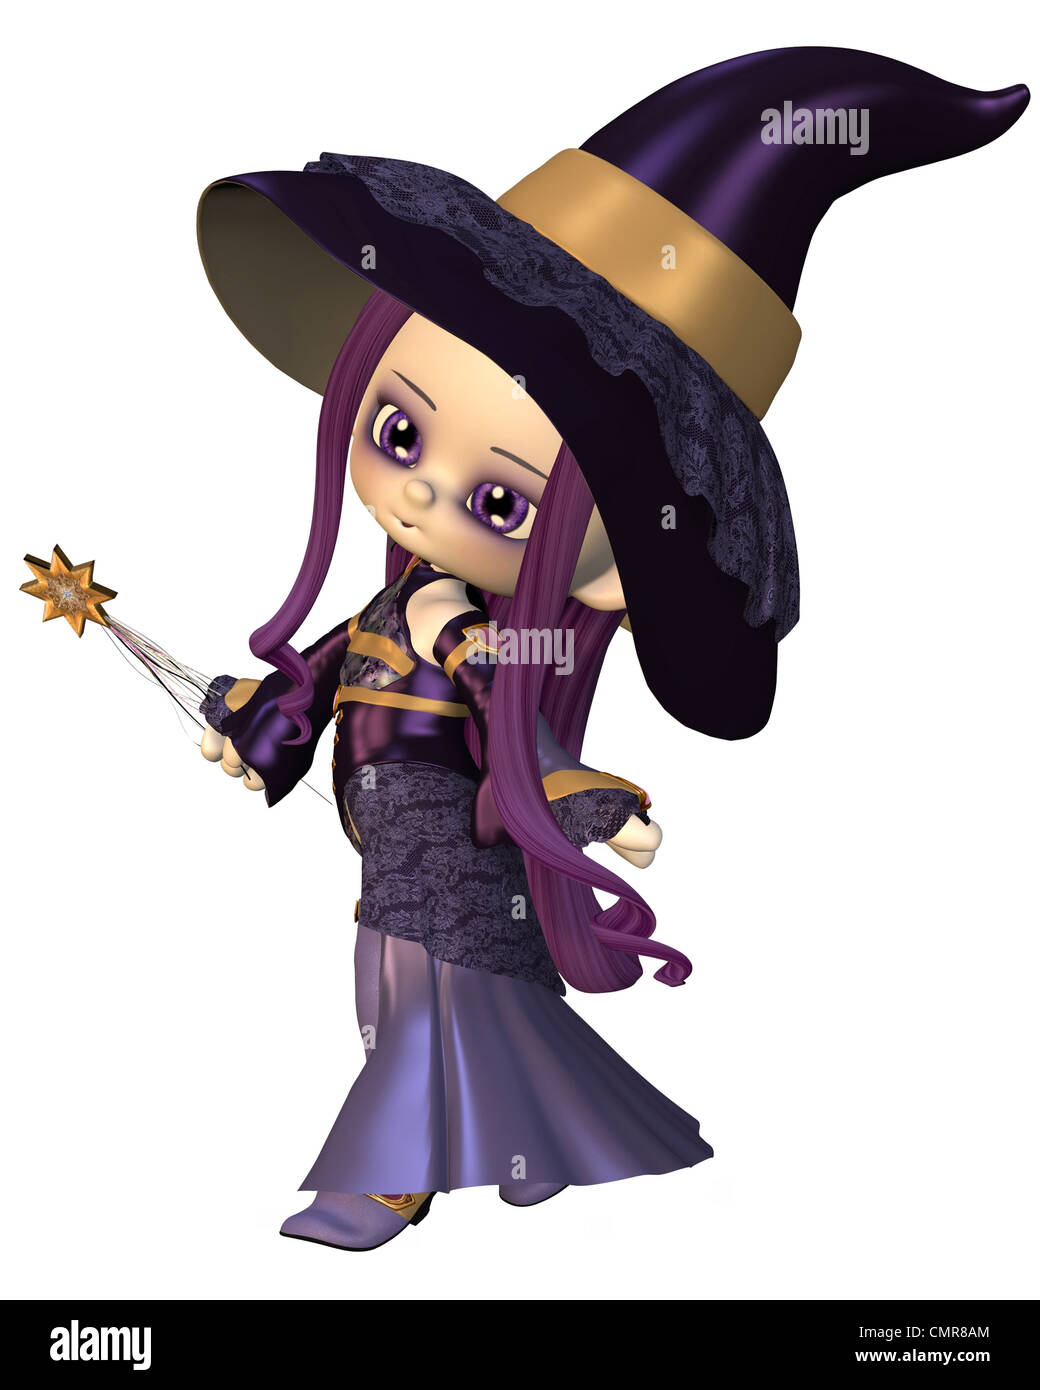 Cute Toon Female Wizard Stock Photo